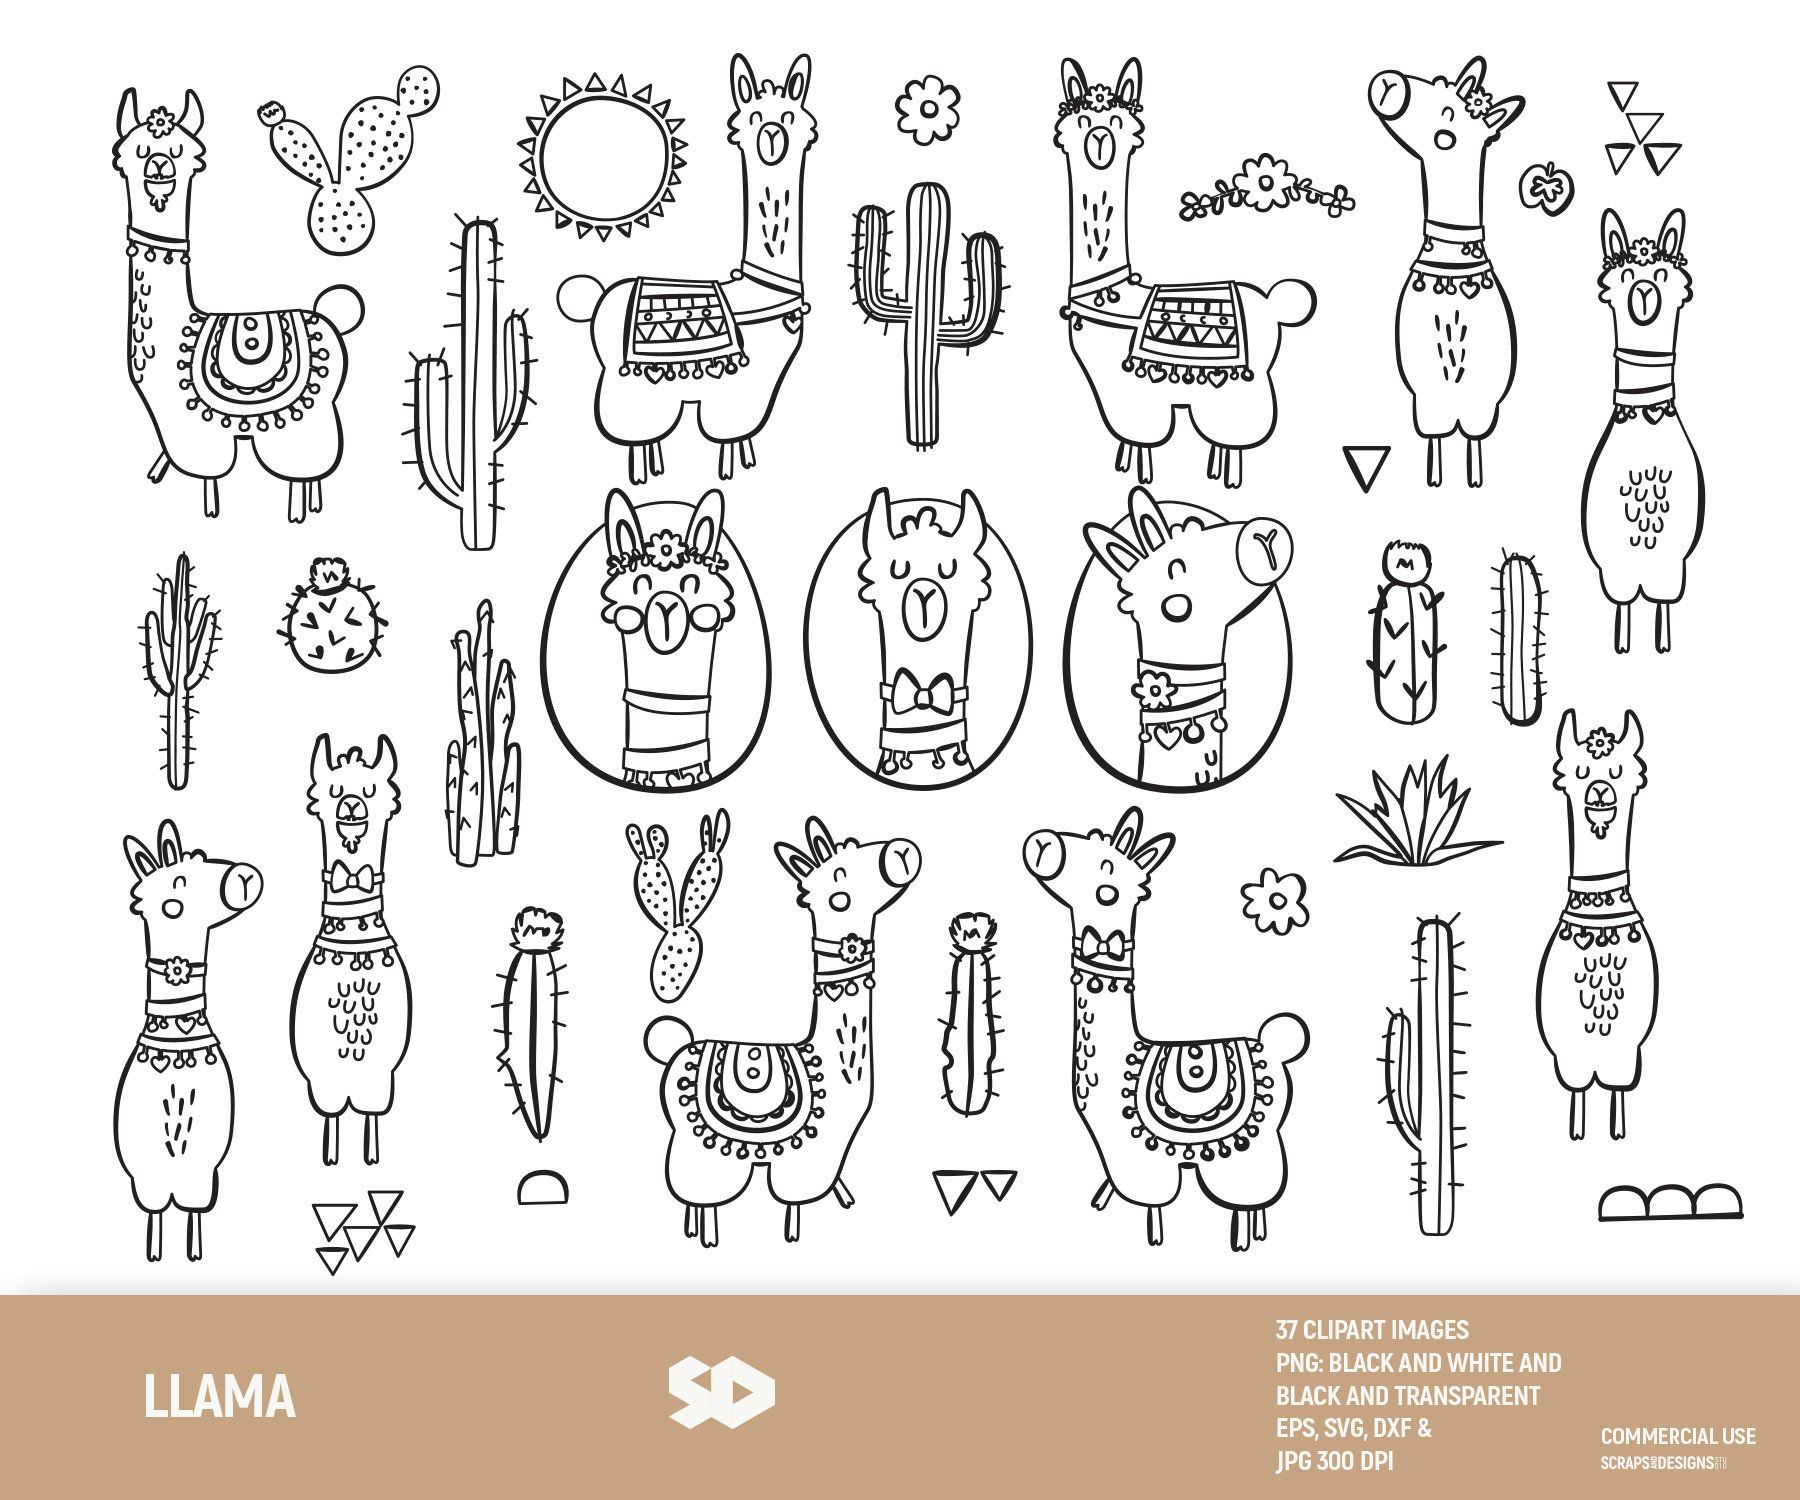 Llama clipart, alpaca clip art, cactus digital stamp.